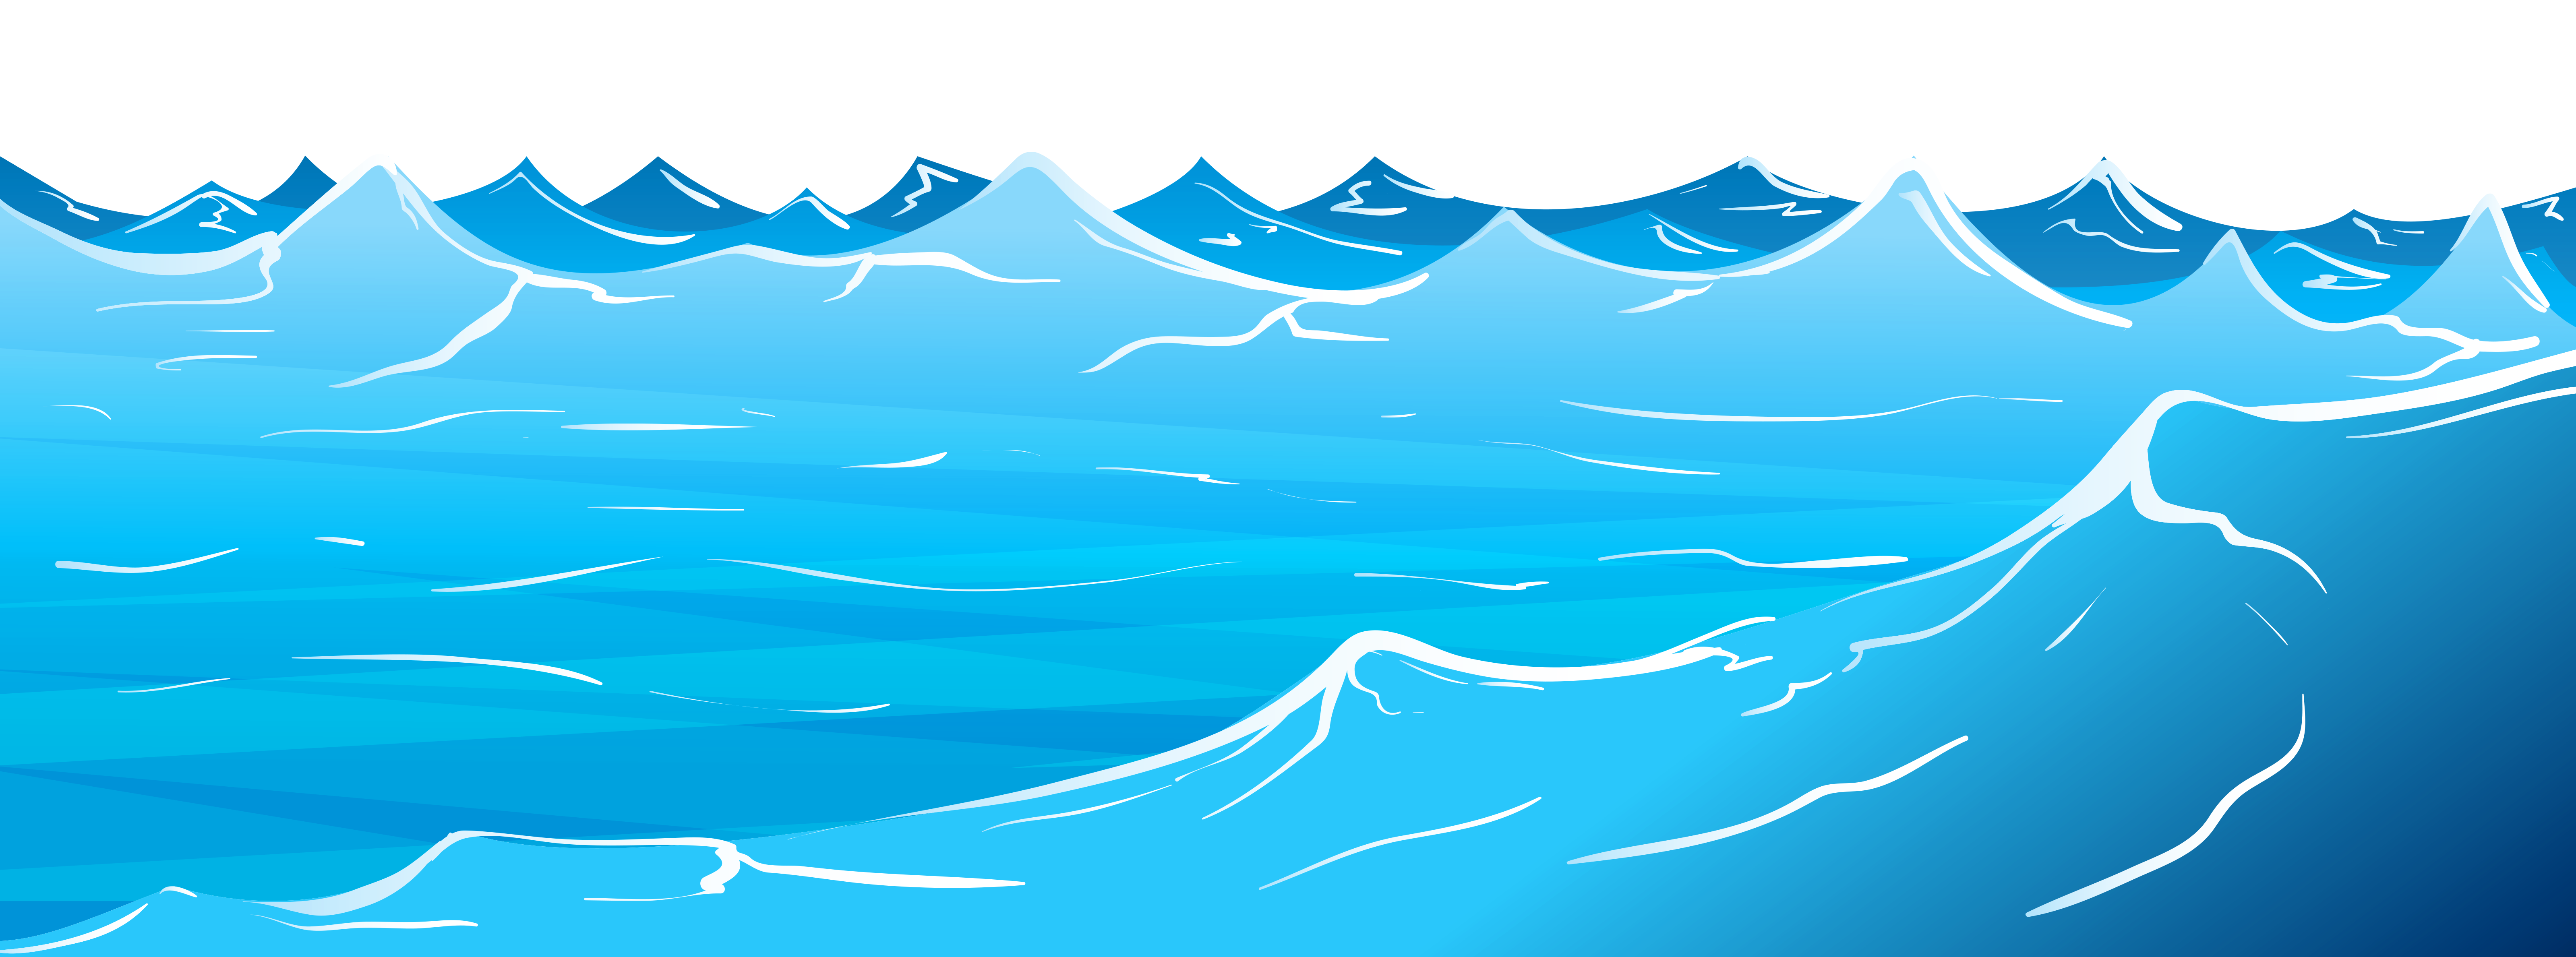 What is in ocean. Waves clipart vague